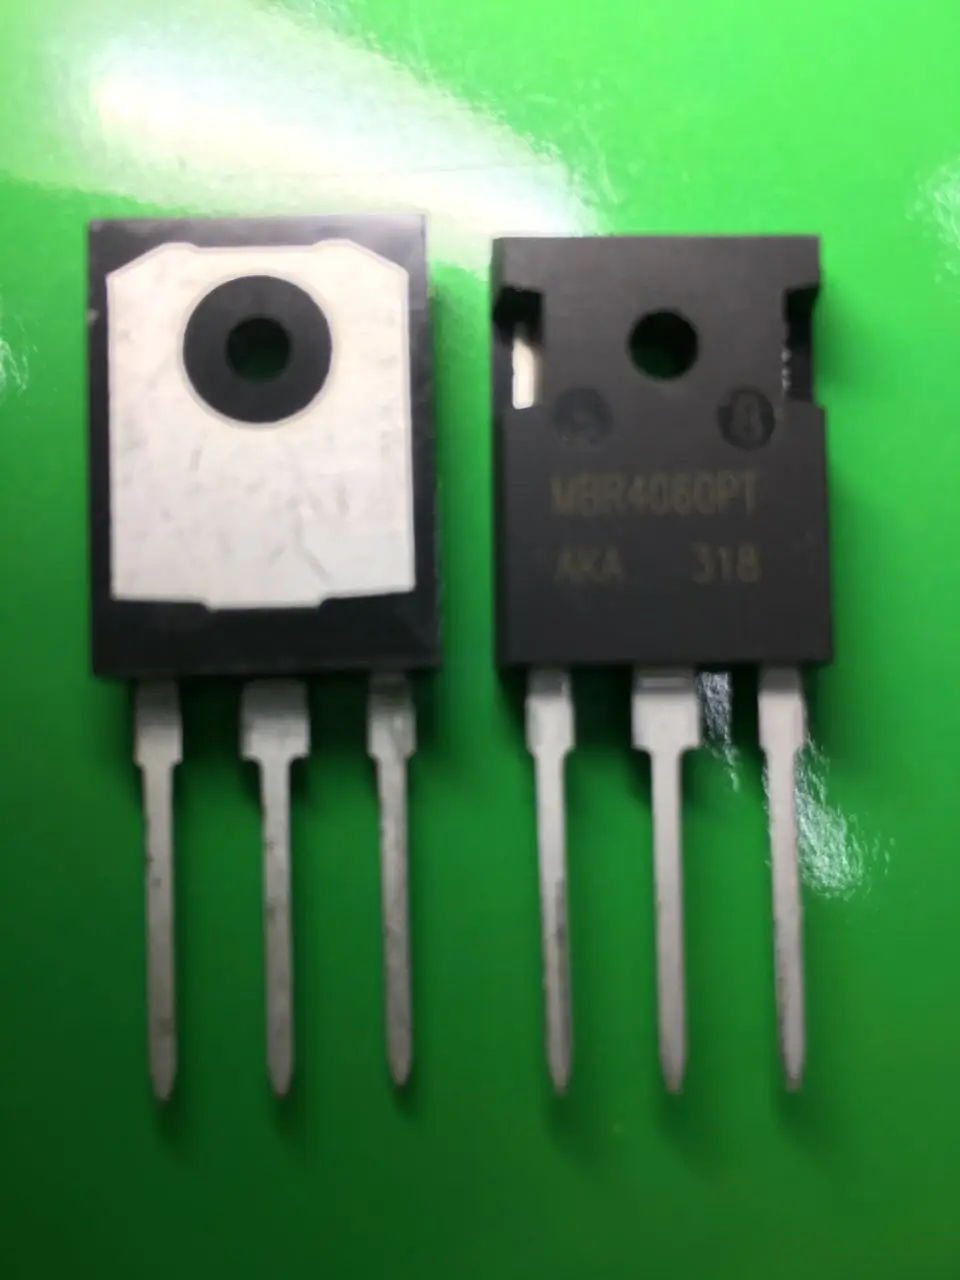 

5pcs/lot MBR4060PT MBR4060APT MBR4060 Schottky transistor 40A60V TO-3P-3 widget In Stock